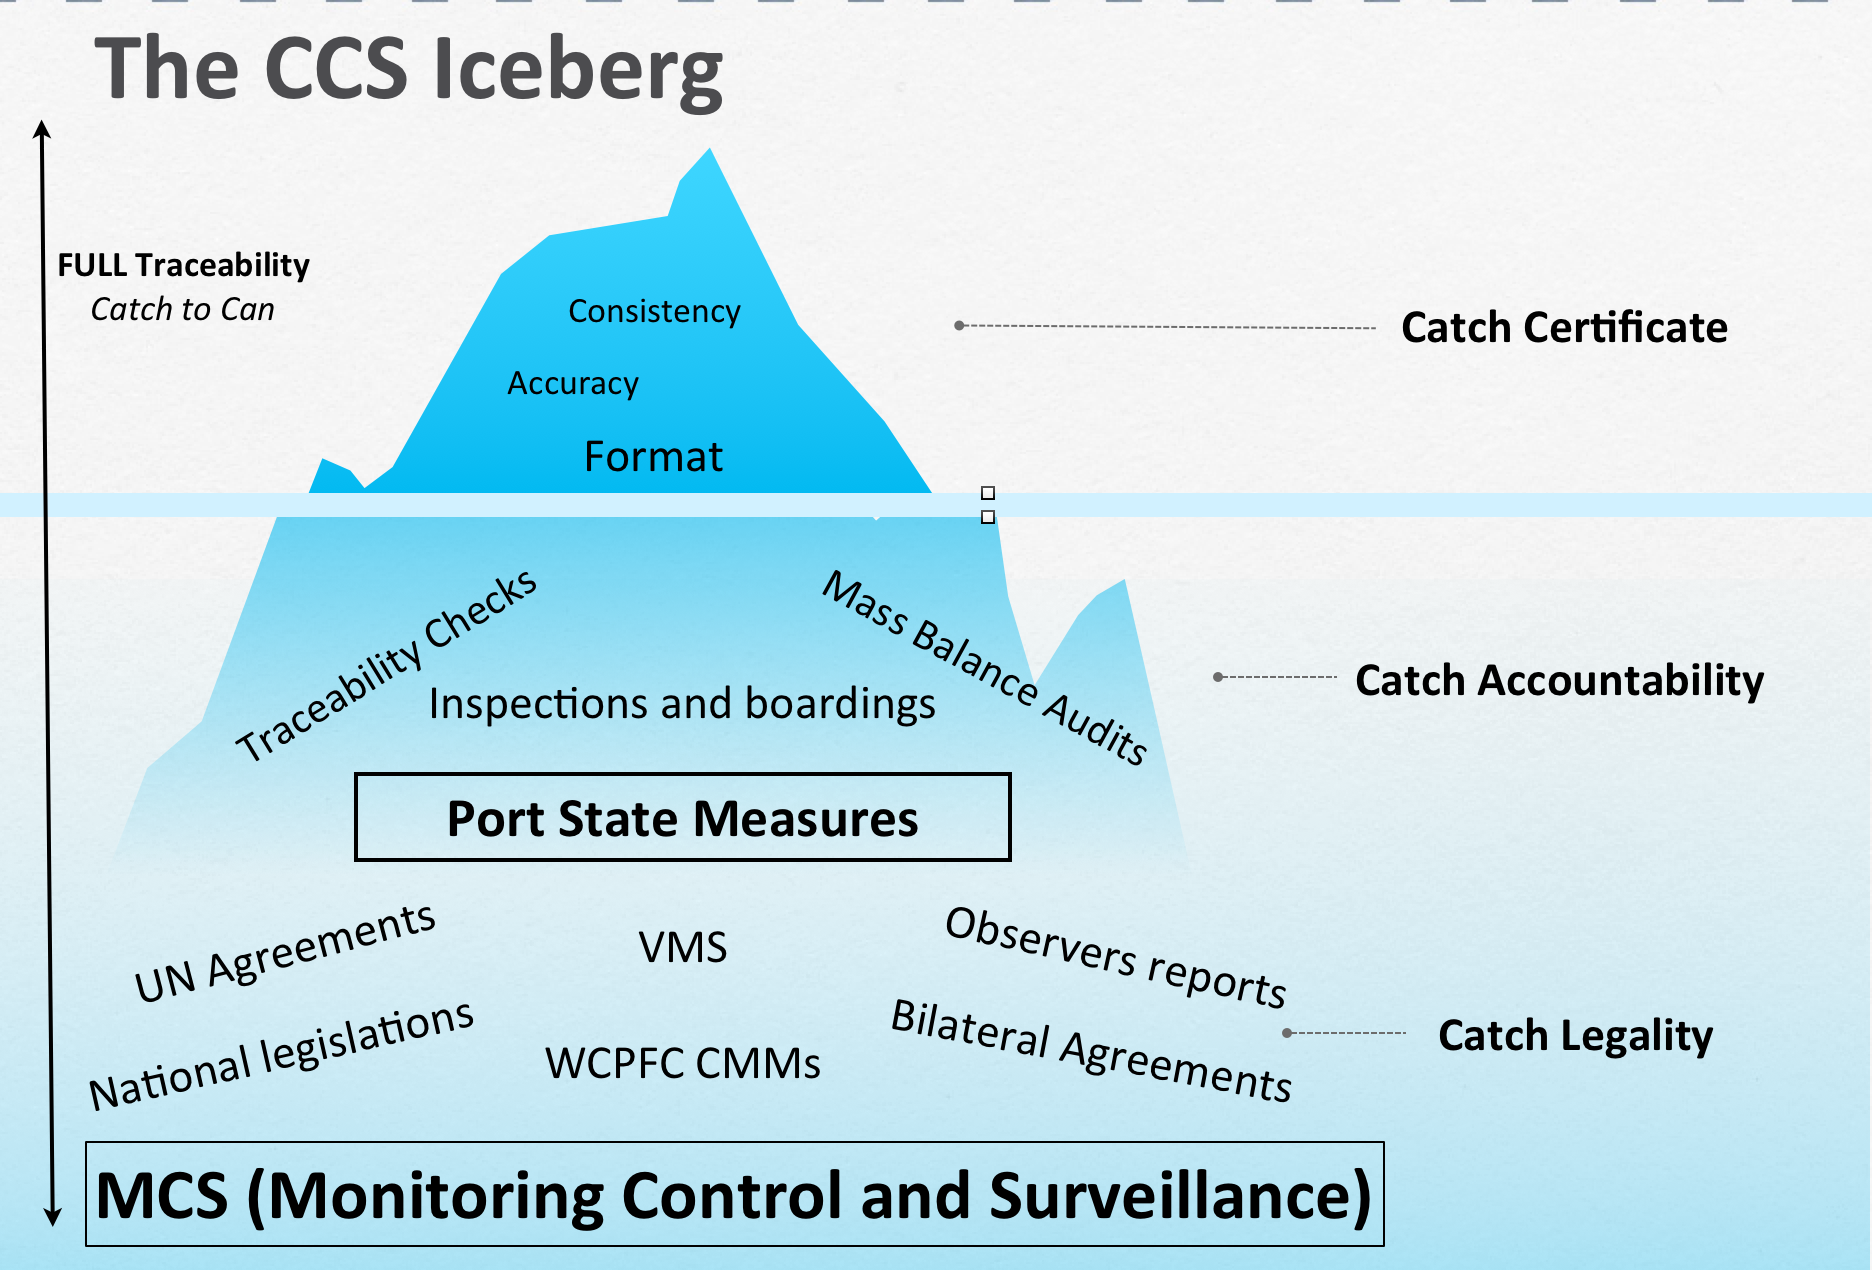 CC iceberg.png